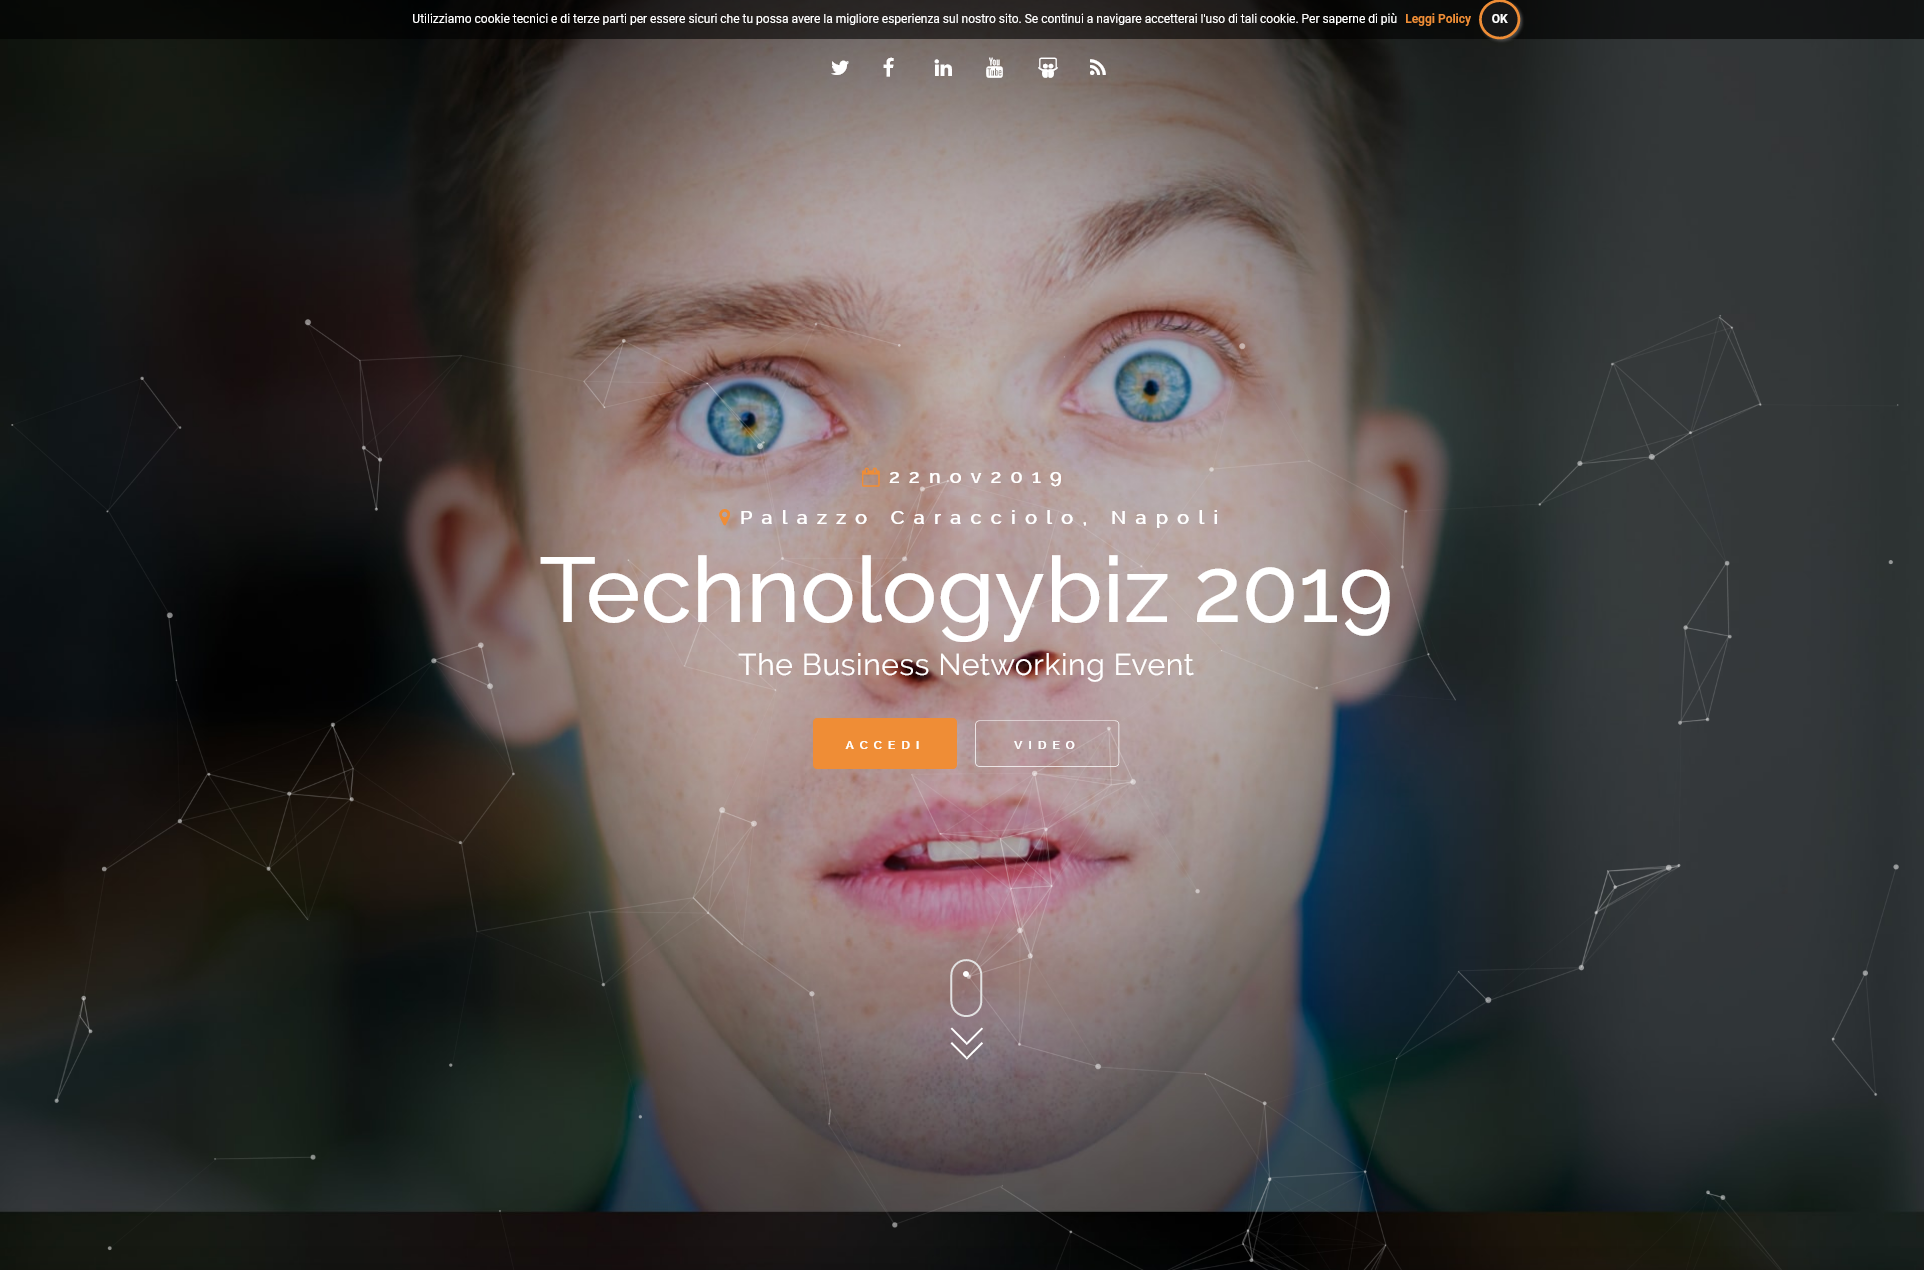 Technologybiz 2019